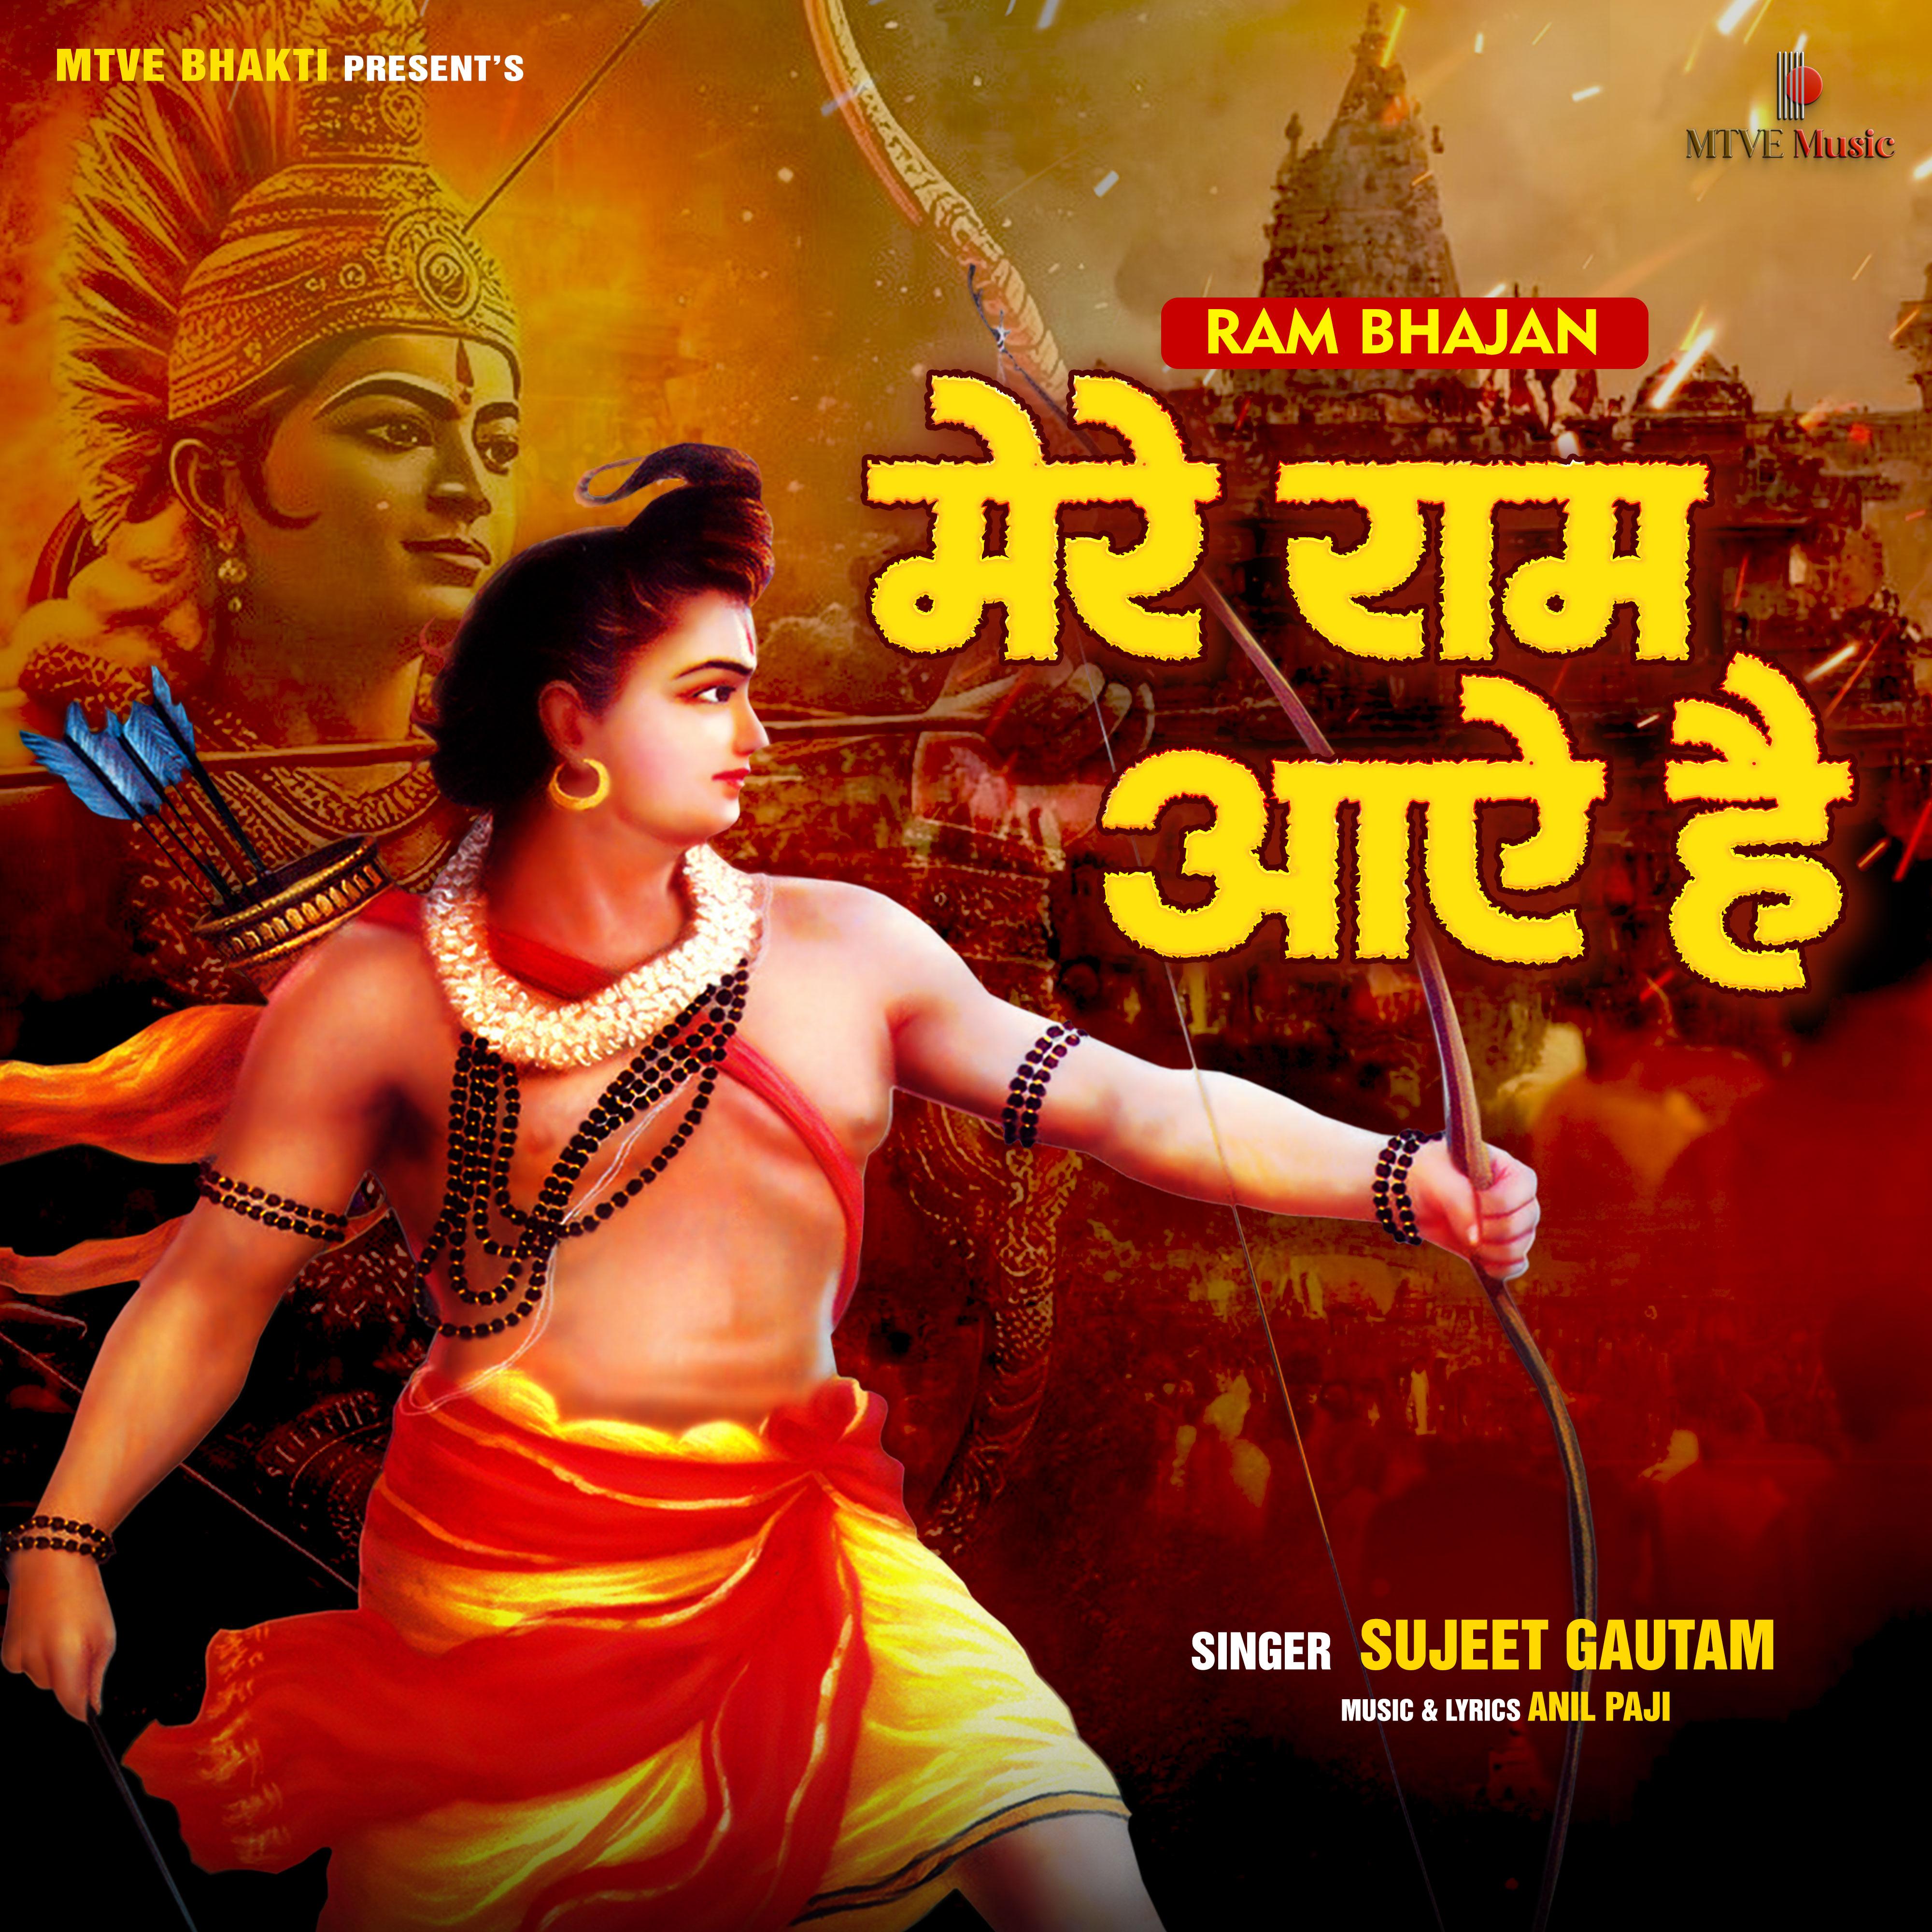 Постер альбома Mere Ram Aaye Hai